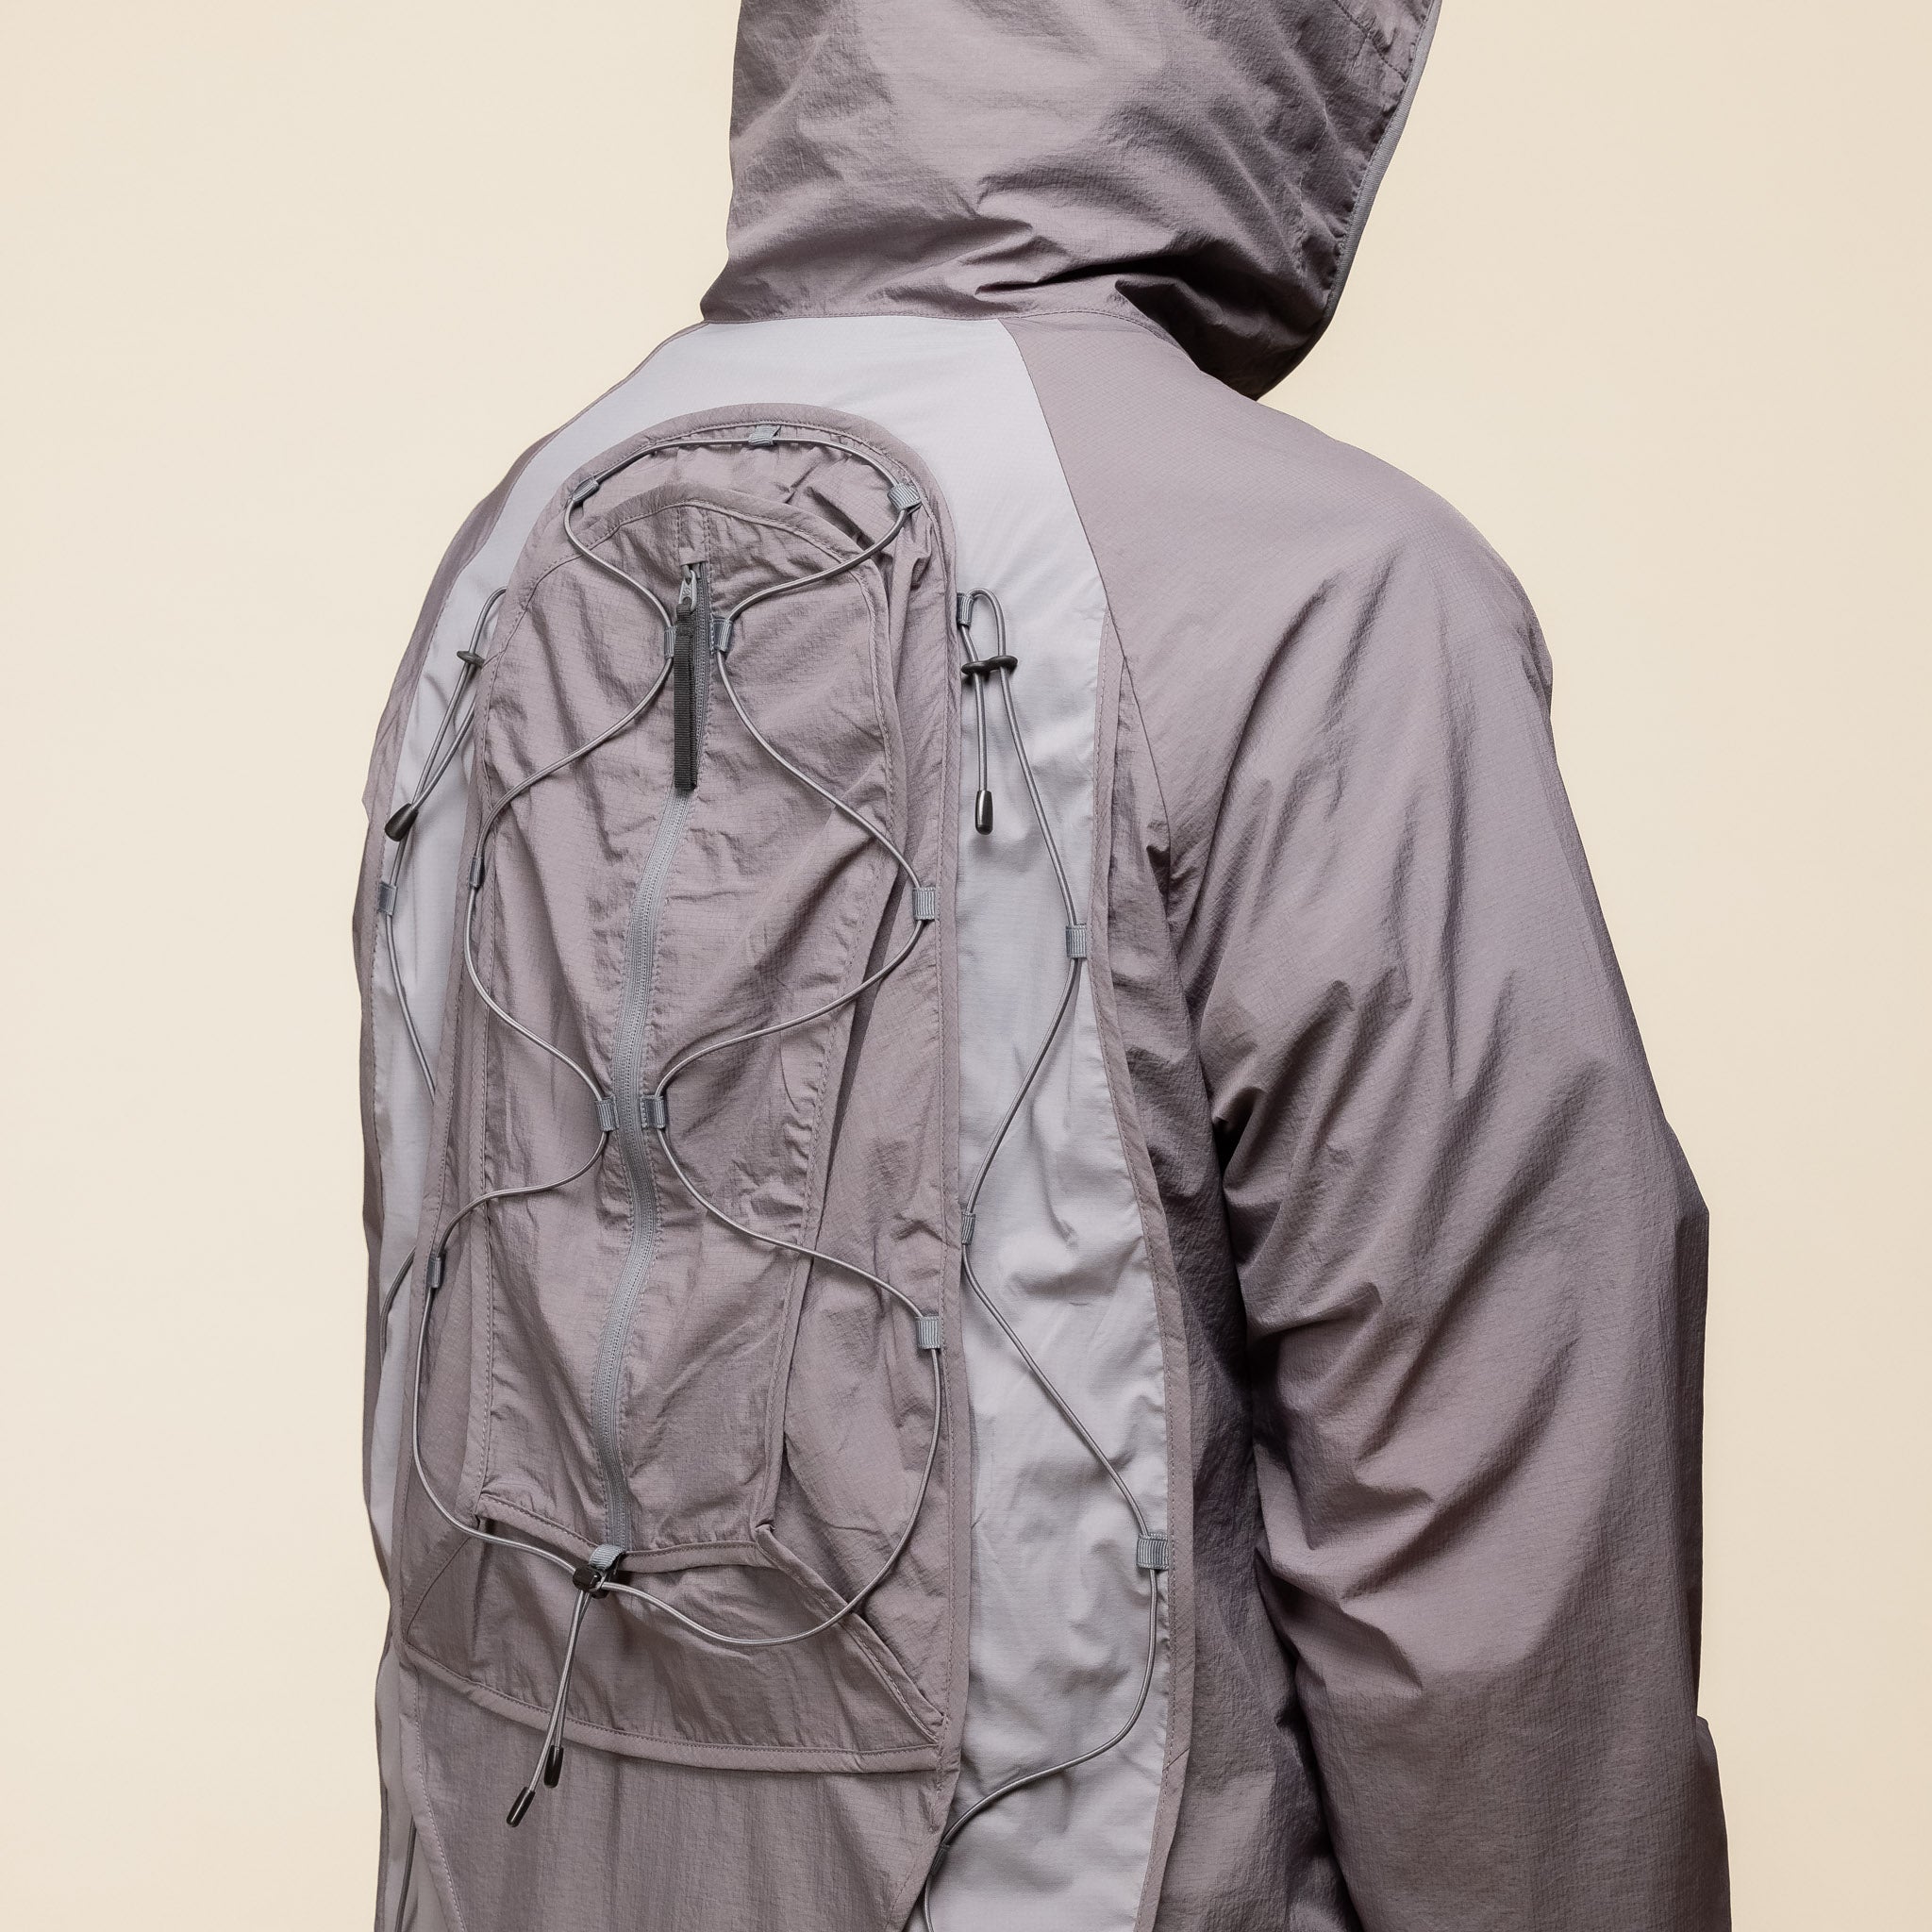 San San Gear - Backpack Jacket - Grey | T.T.O.O